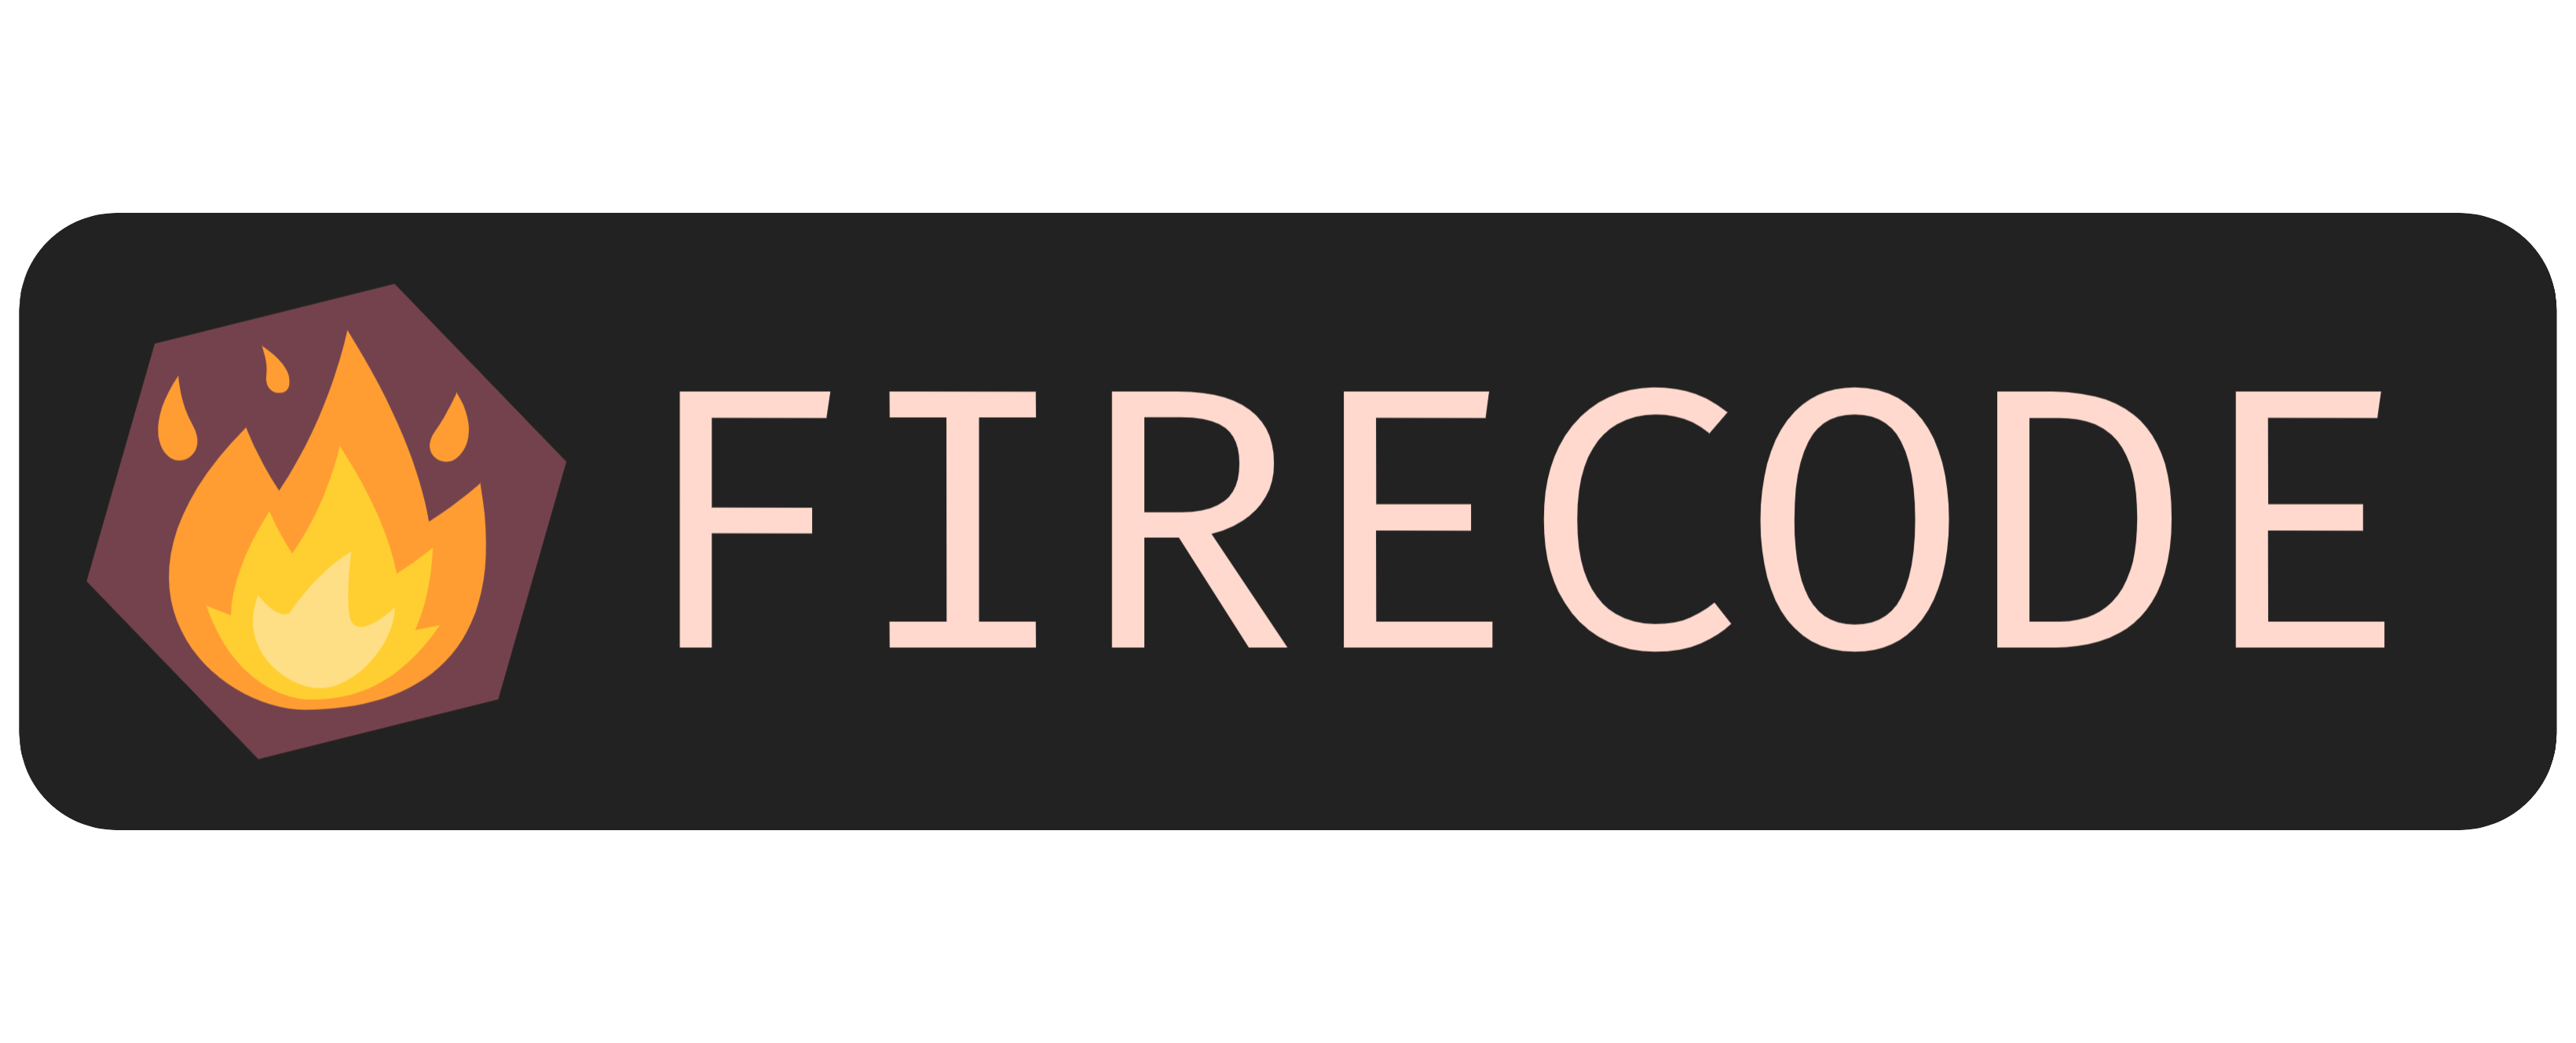 FIRECODE logo